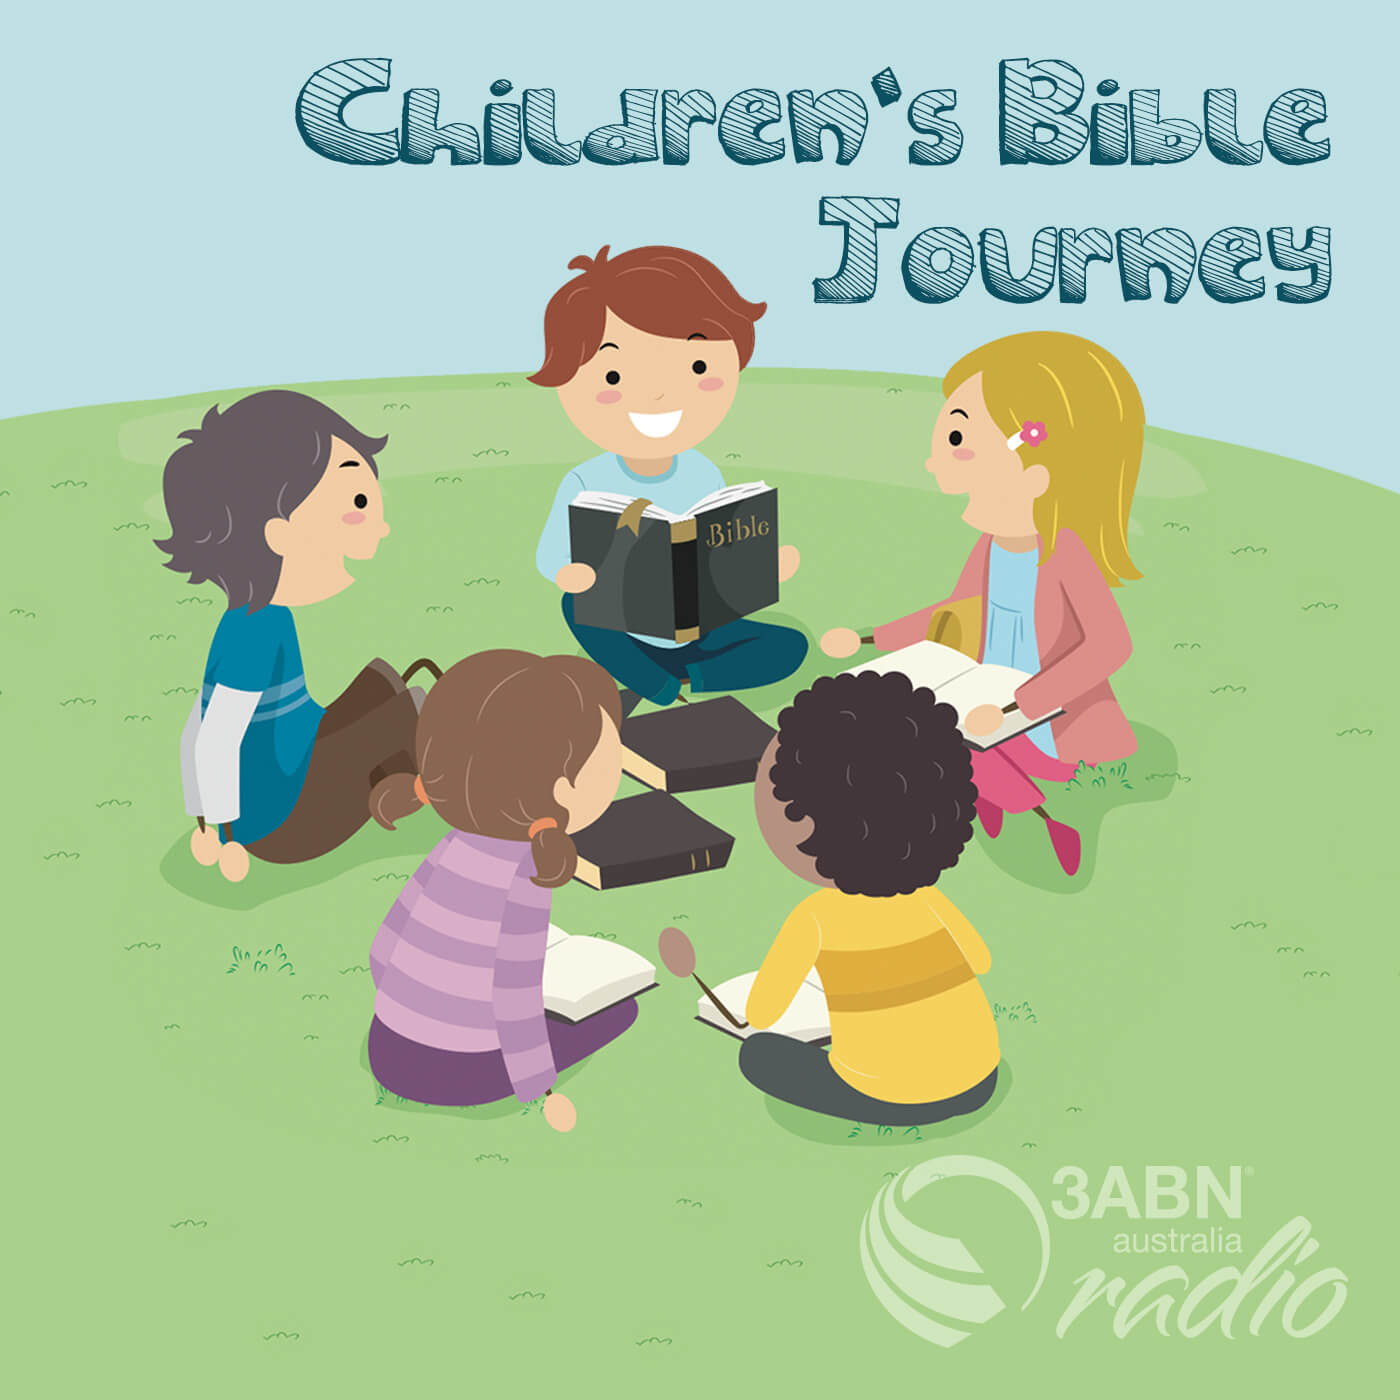 Children's Bible Journey - 2137